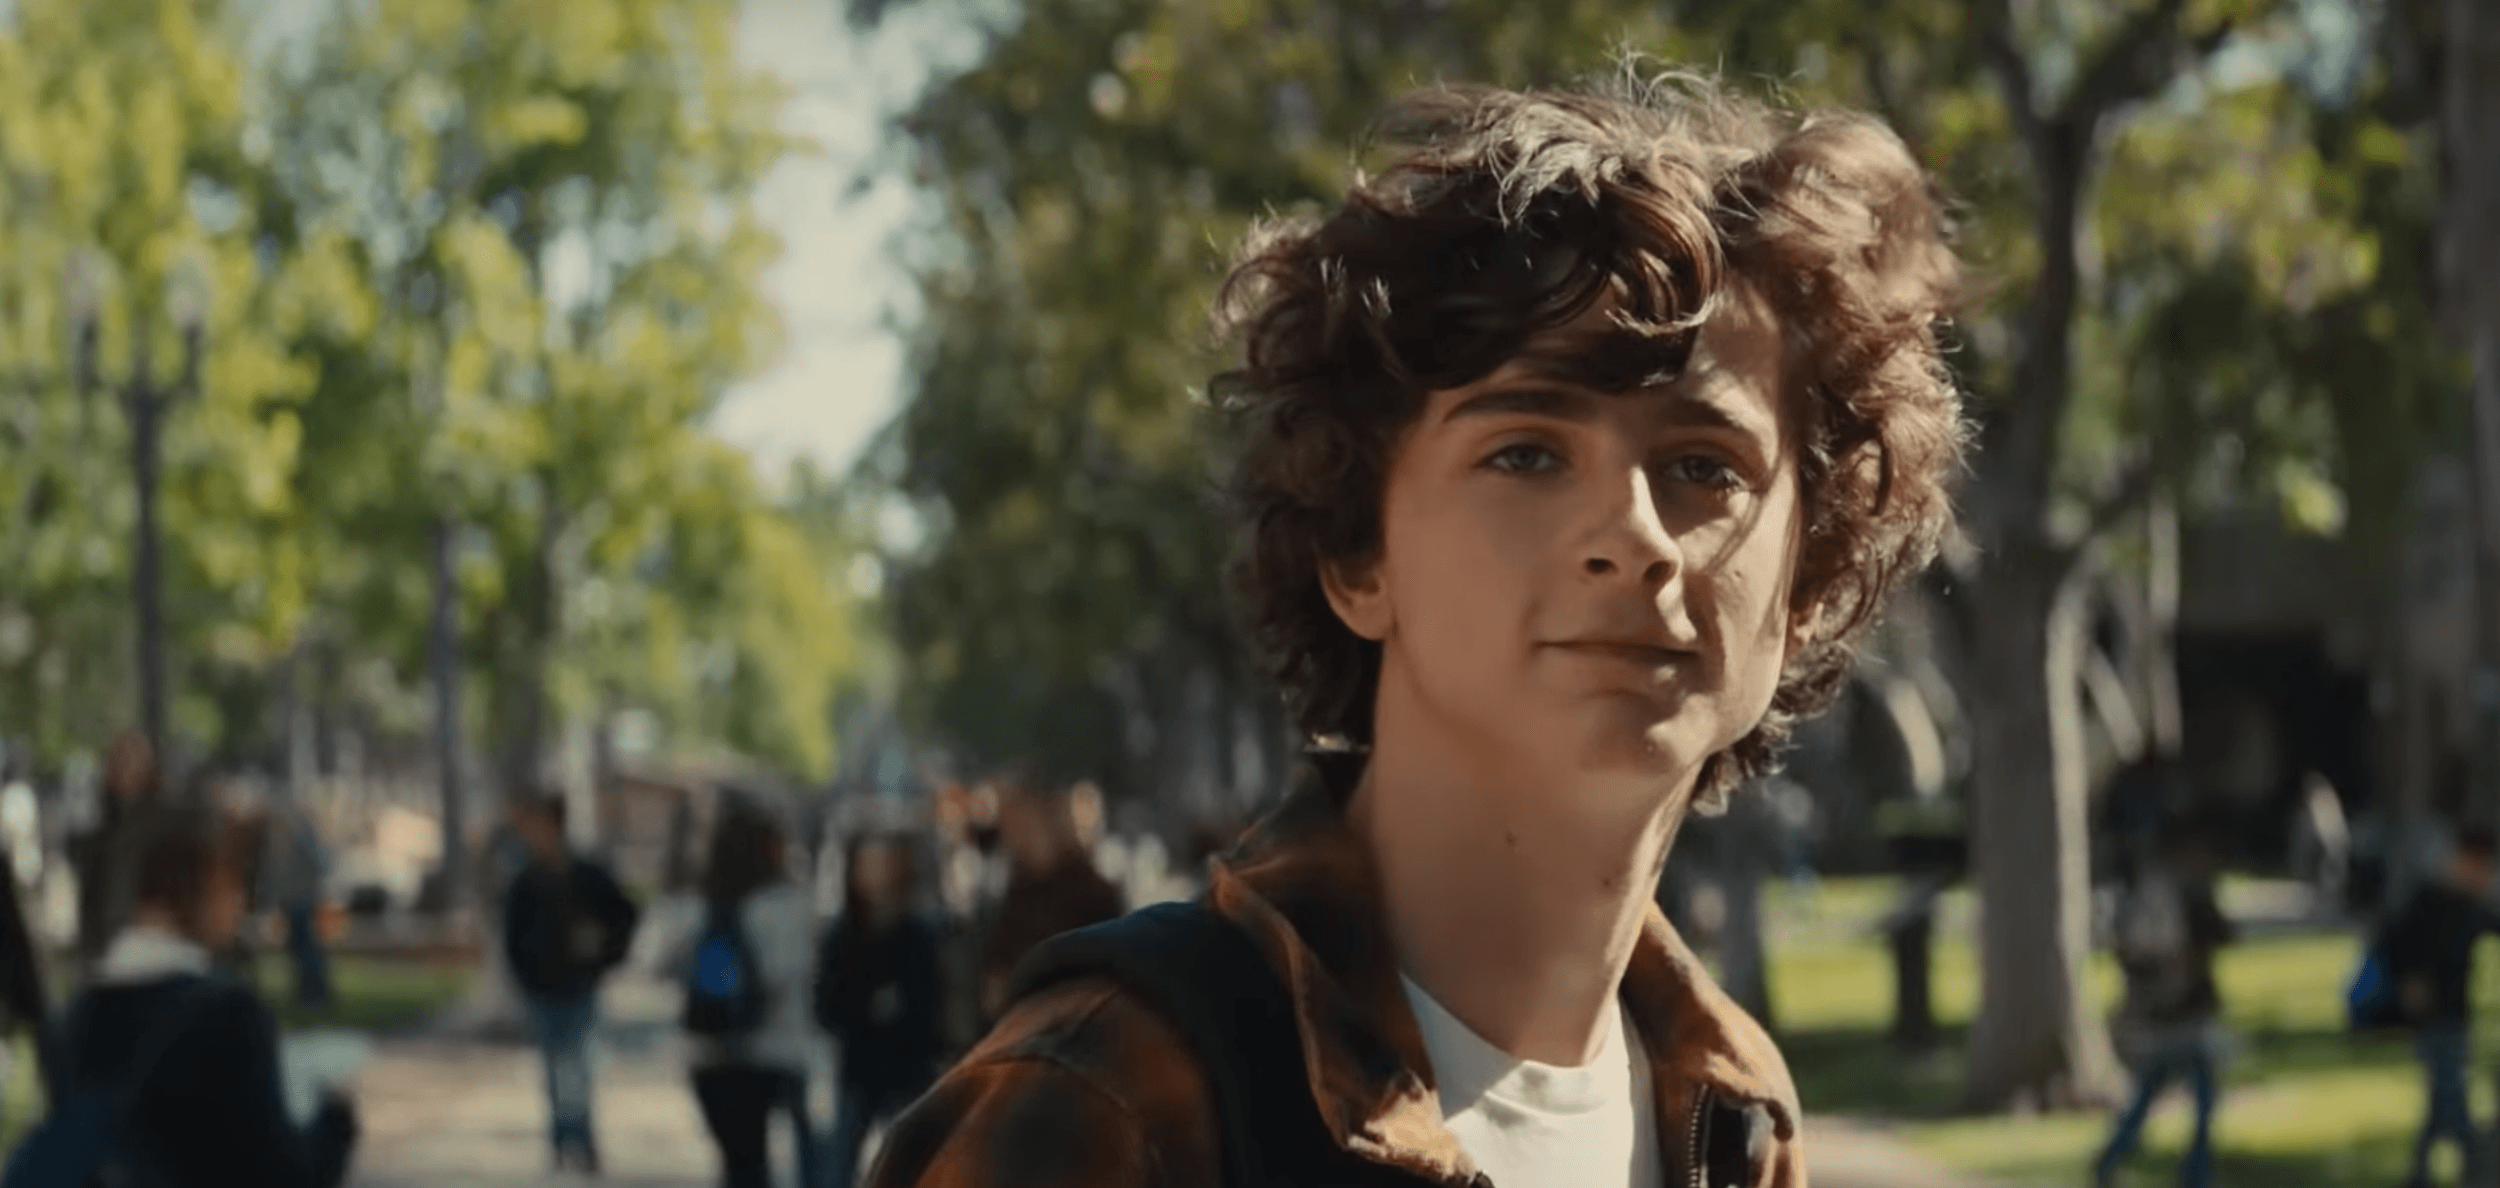 Timothée Chalamet Is a Beautiful Boy in His New Film